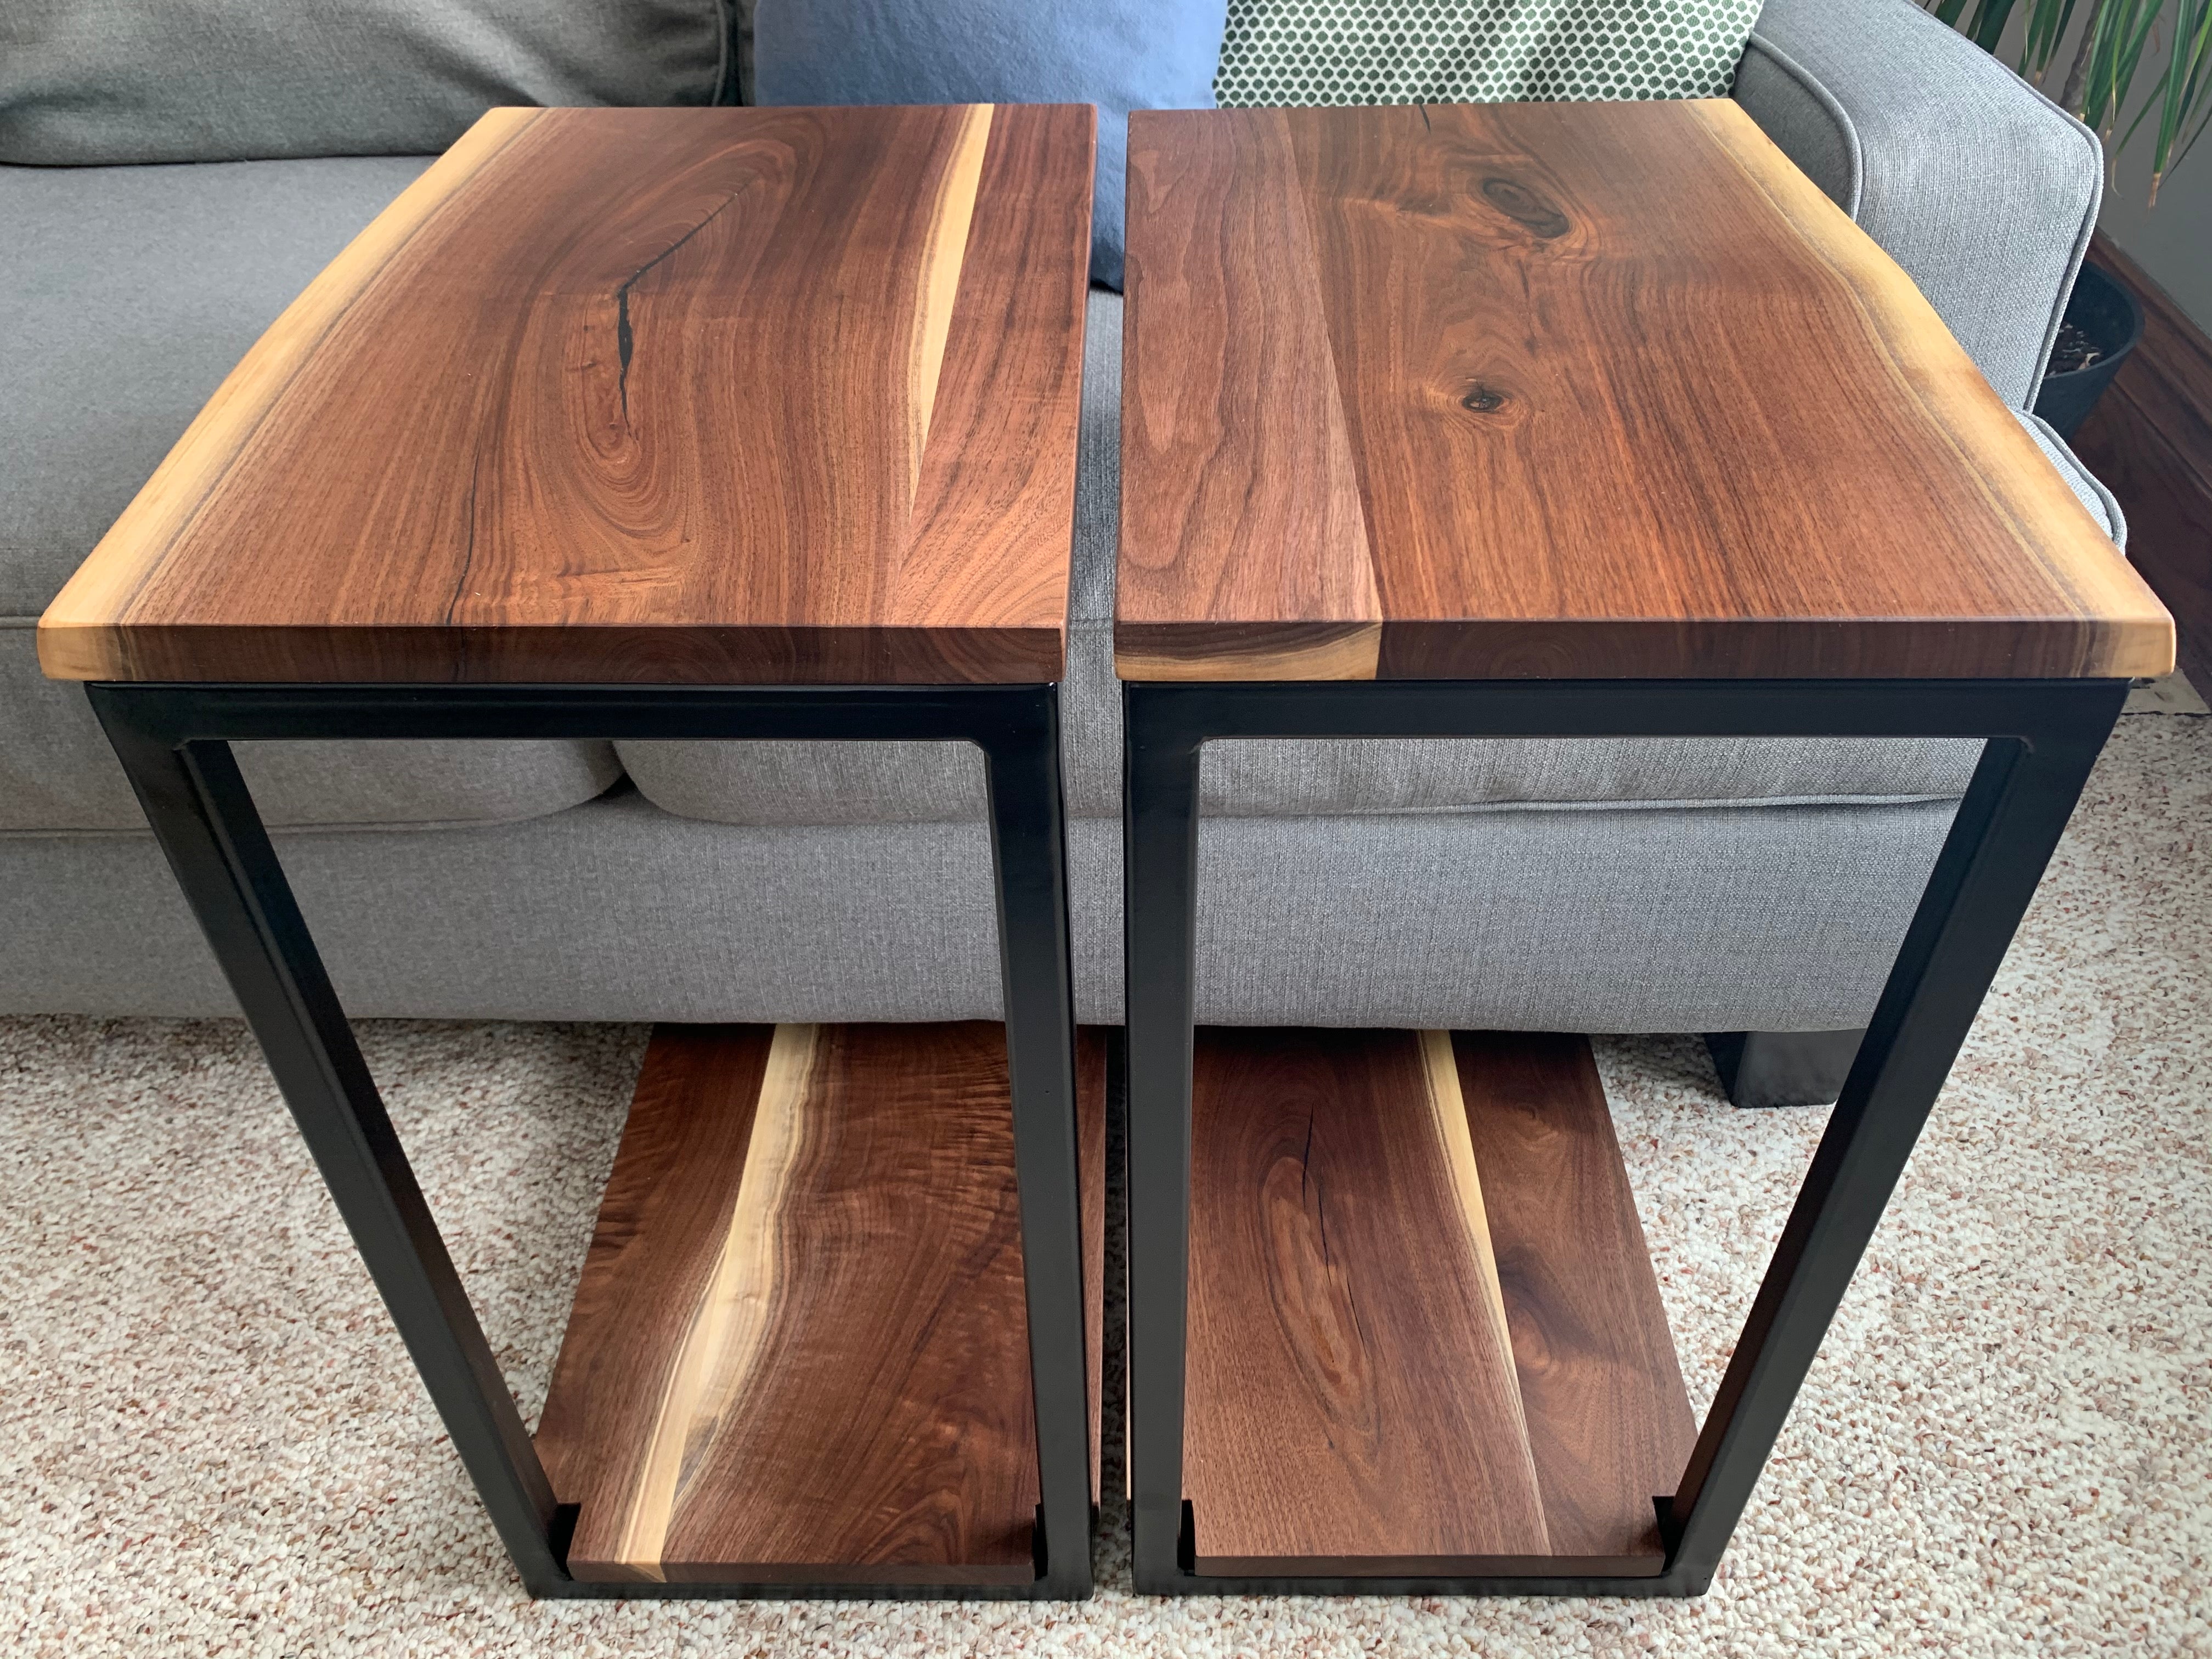 Floor Shelf Live Edge Walnut Wood C Table